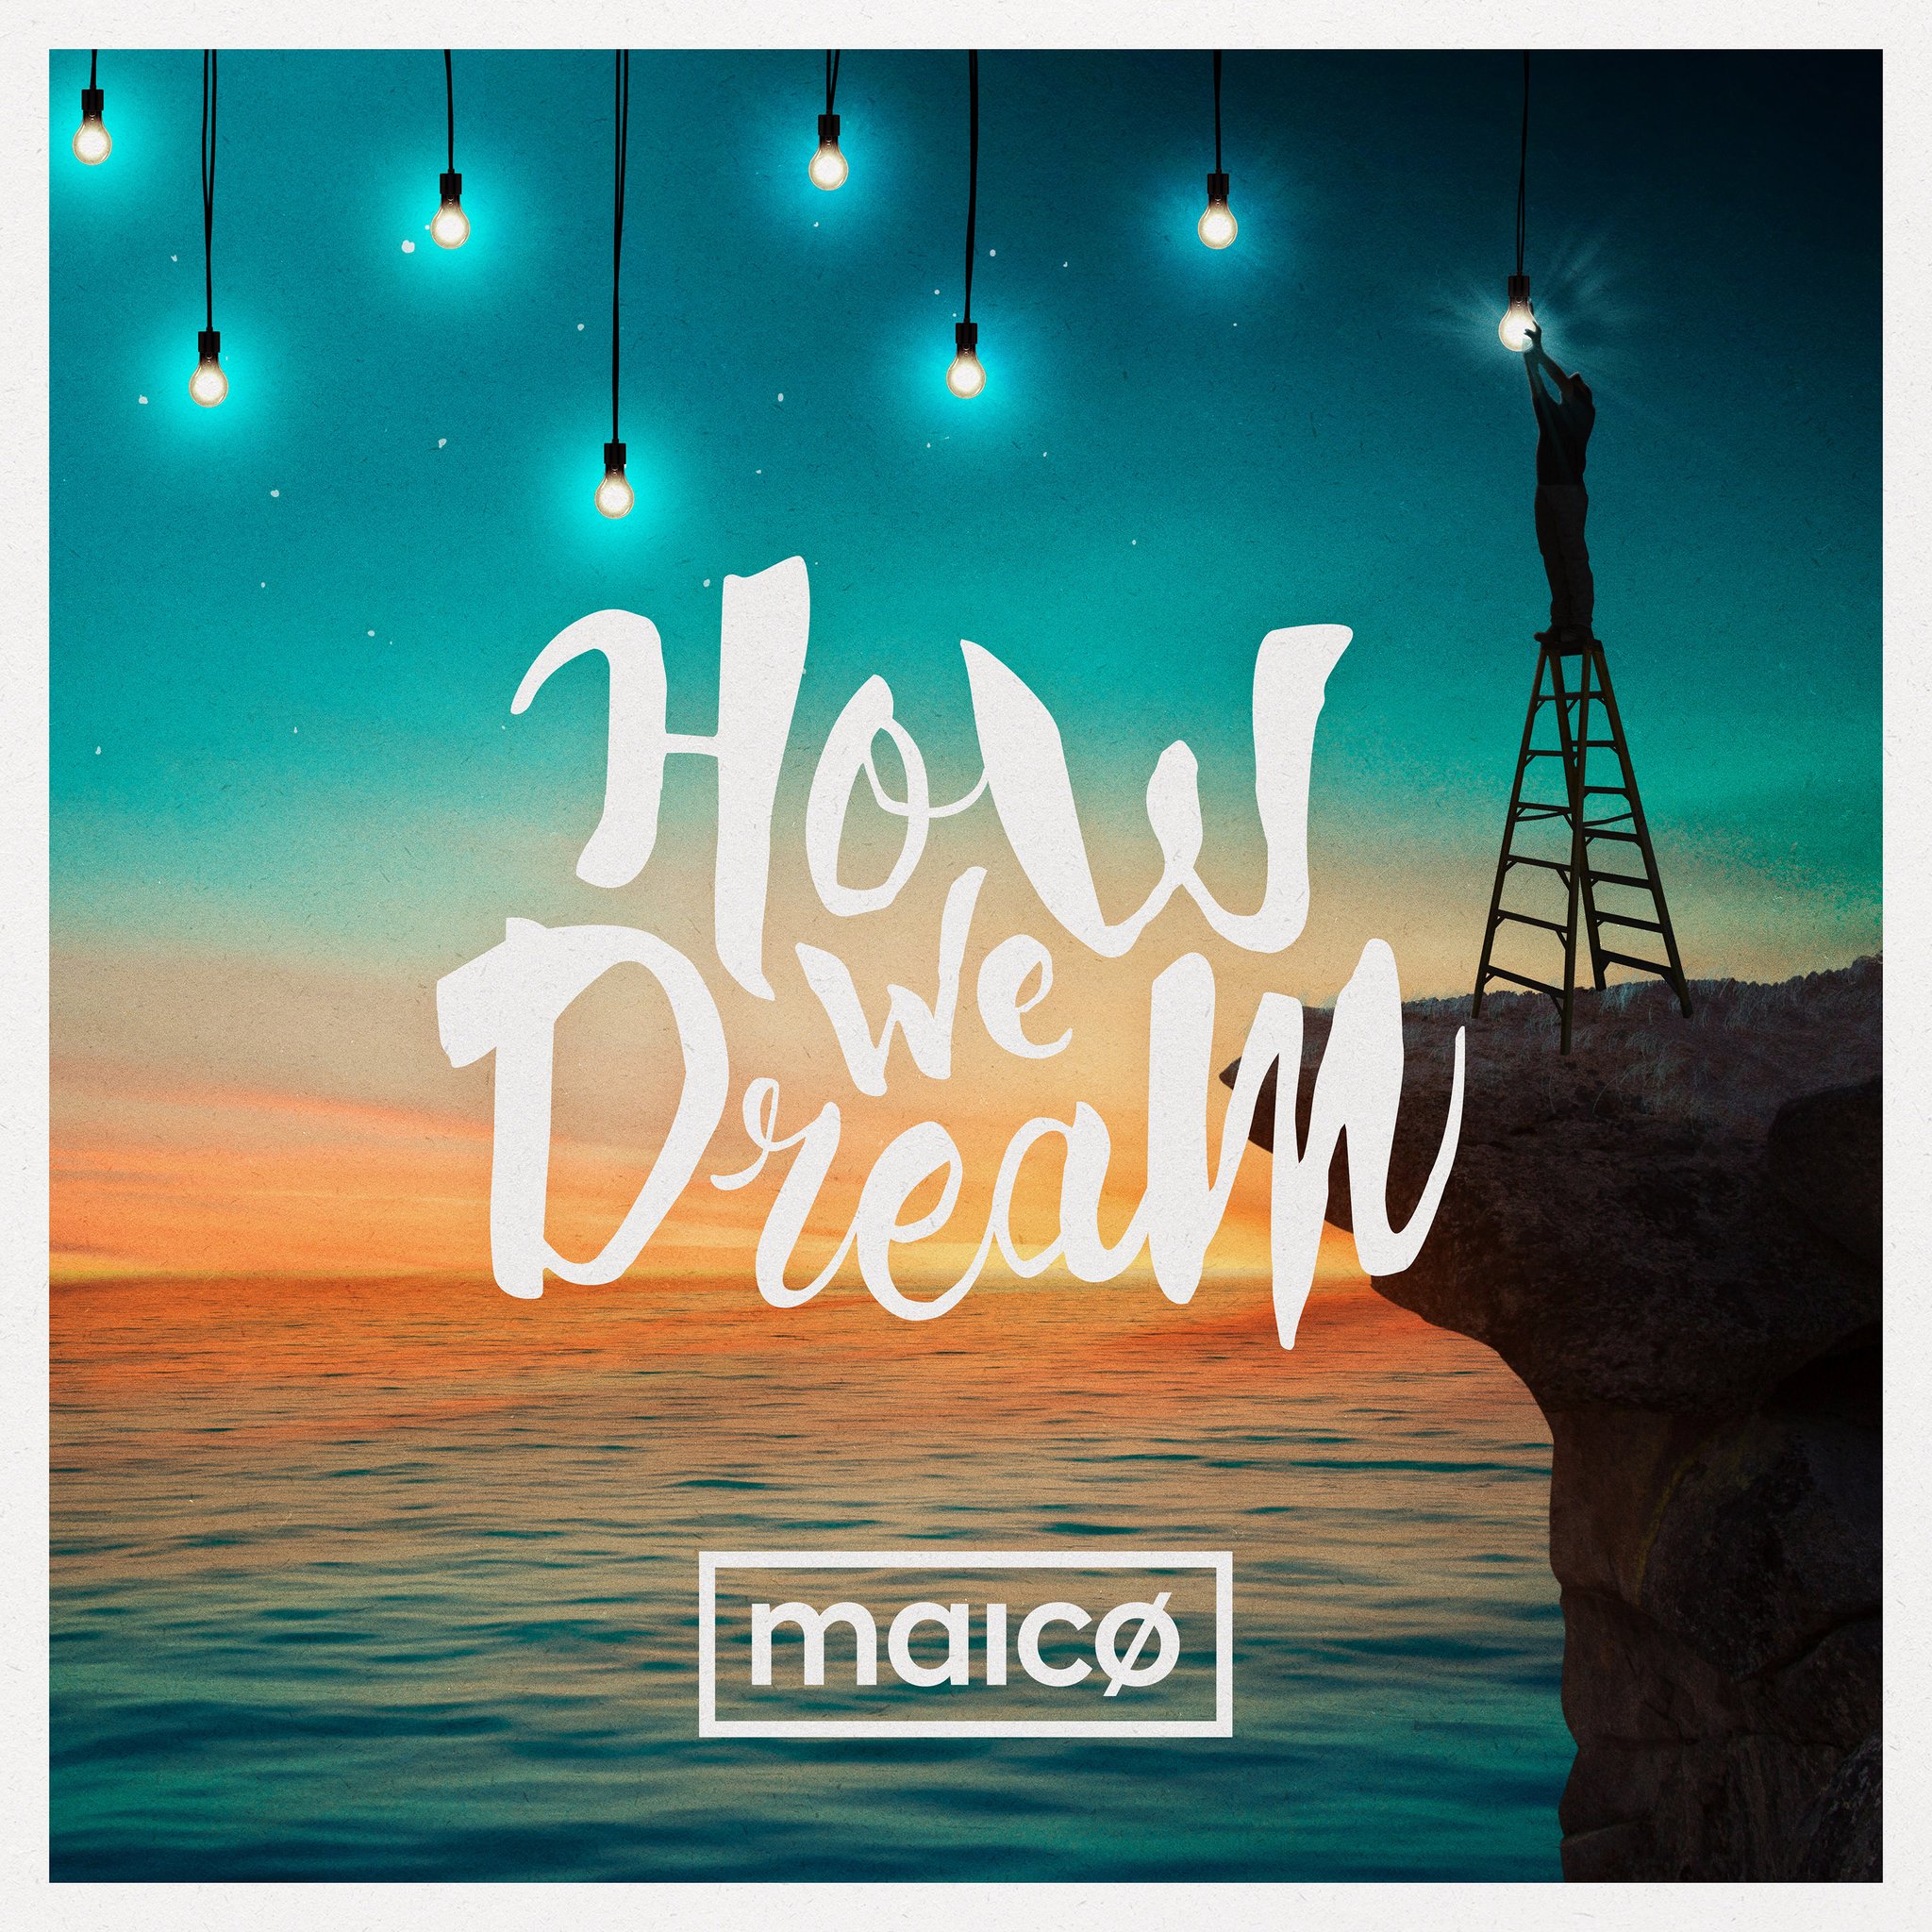 MAICO - How We Dream